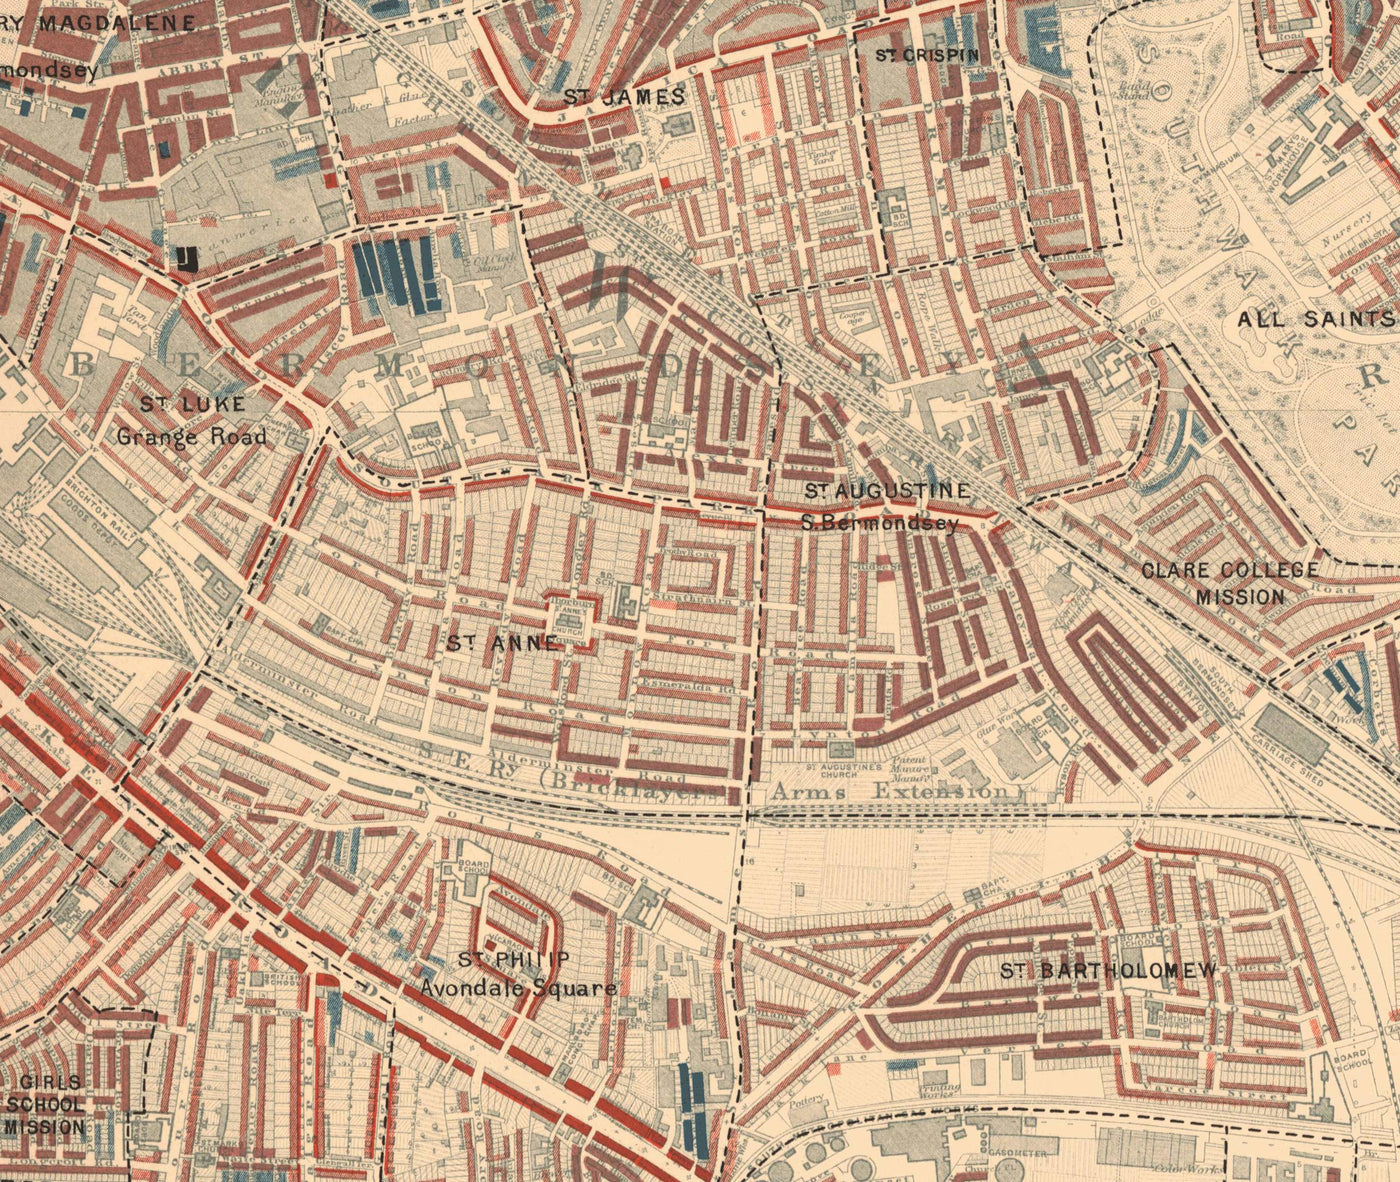 Mapa de la pobreza en Londres 1898-9, Inner Southern, por Charles Booth - Southwark, Waterloo, London Bridge, Camberwell, Peckham, Bermondsey - SE1, SE11, SE17, SE16, SE15